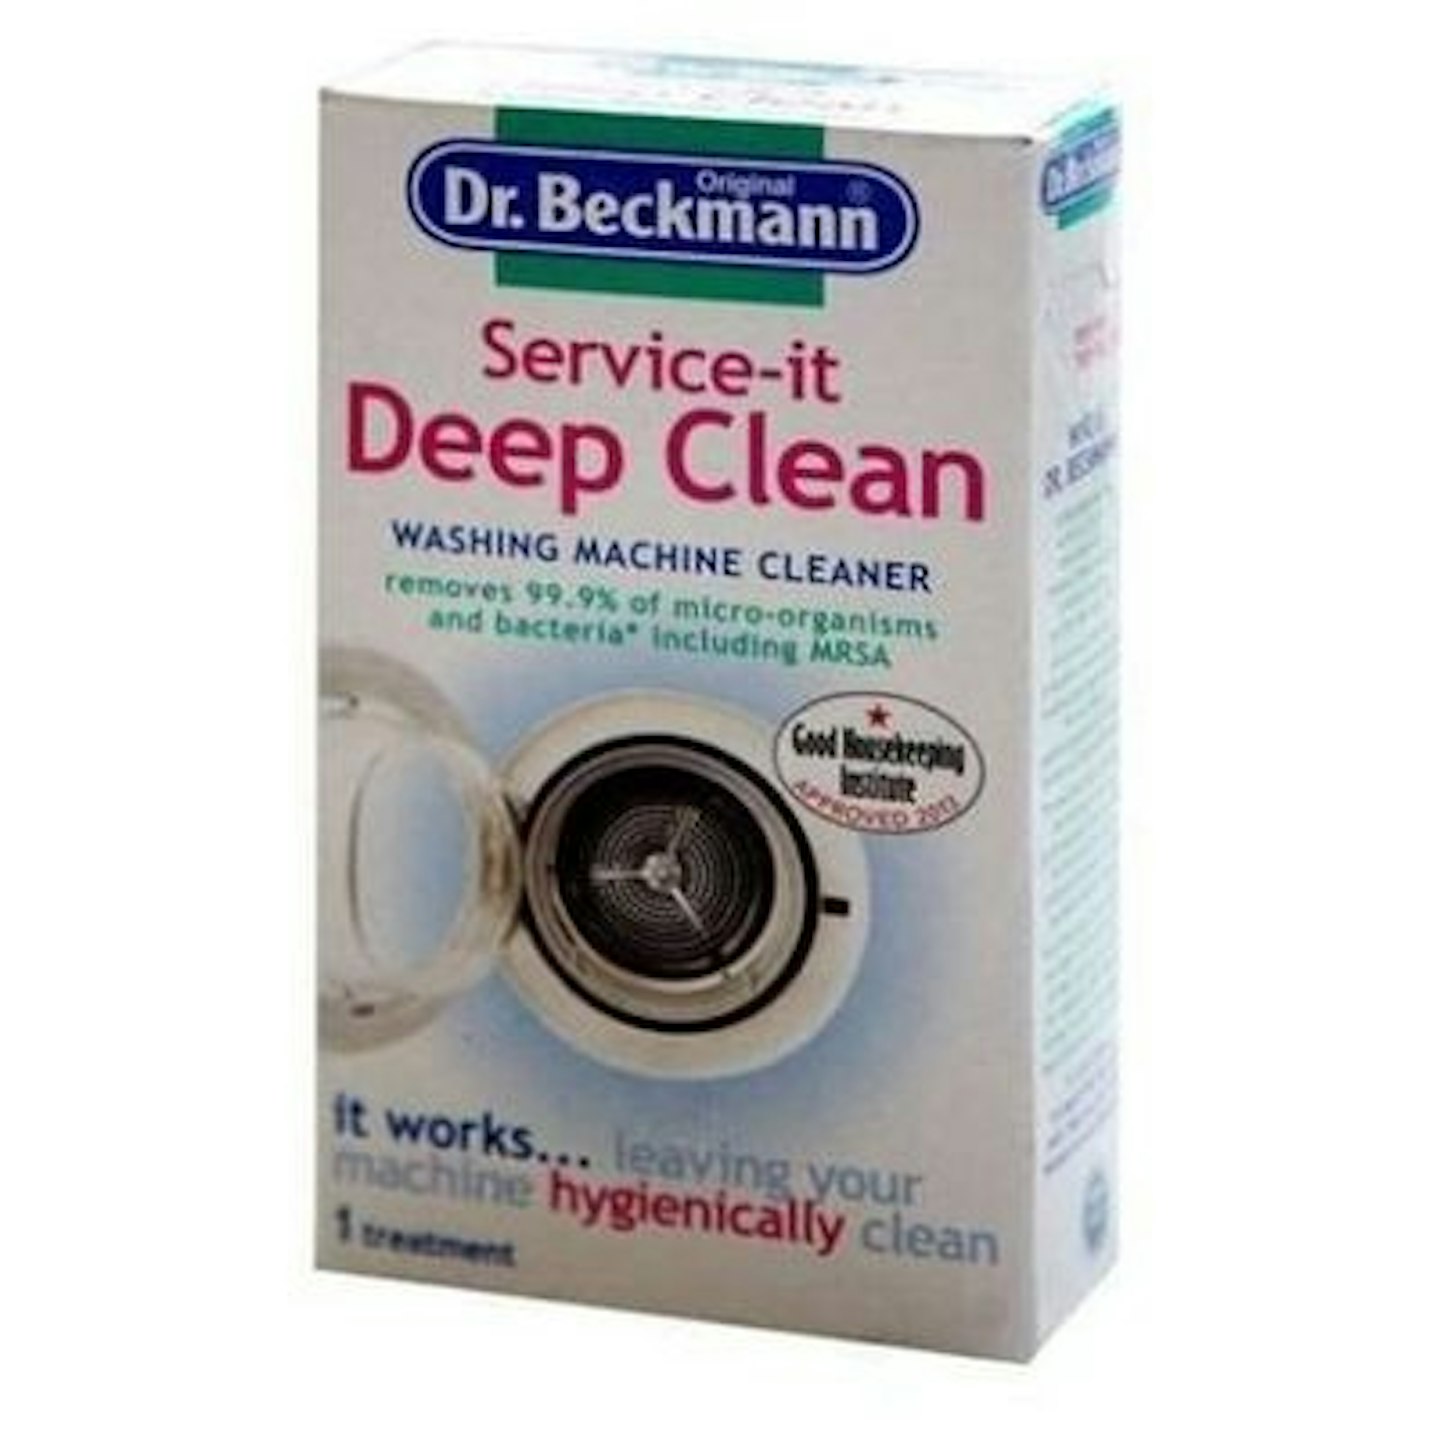 https://images.bauerhosting.com/legacy/media/60b0/9f31/e487/8145/c087/7125/_Dr_Beckmann_Service-It_Deep_Clean_Washing_Machine_Cleaner.jpg?auto=format&w=1440&q=80